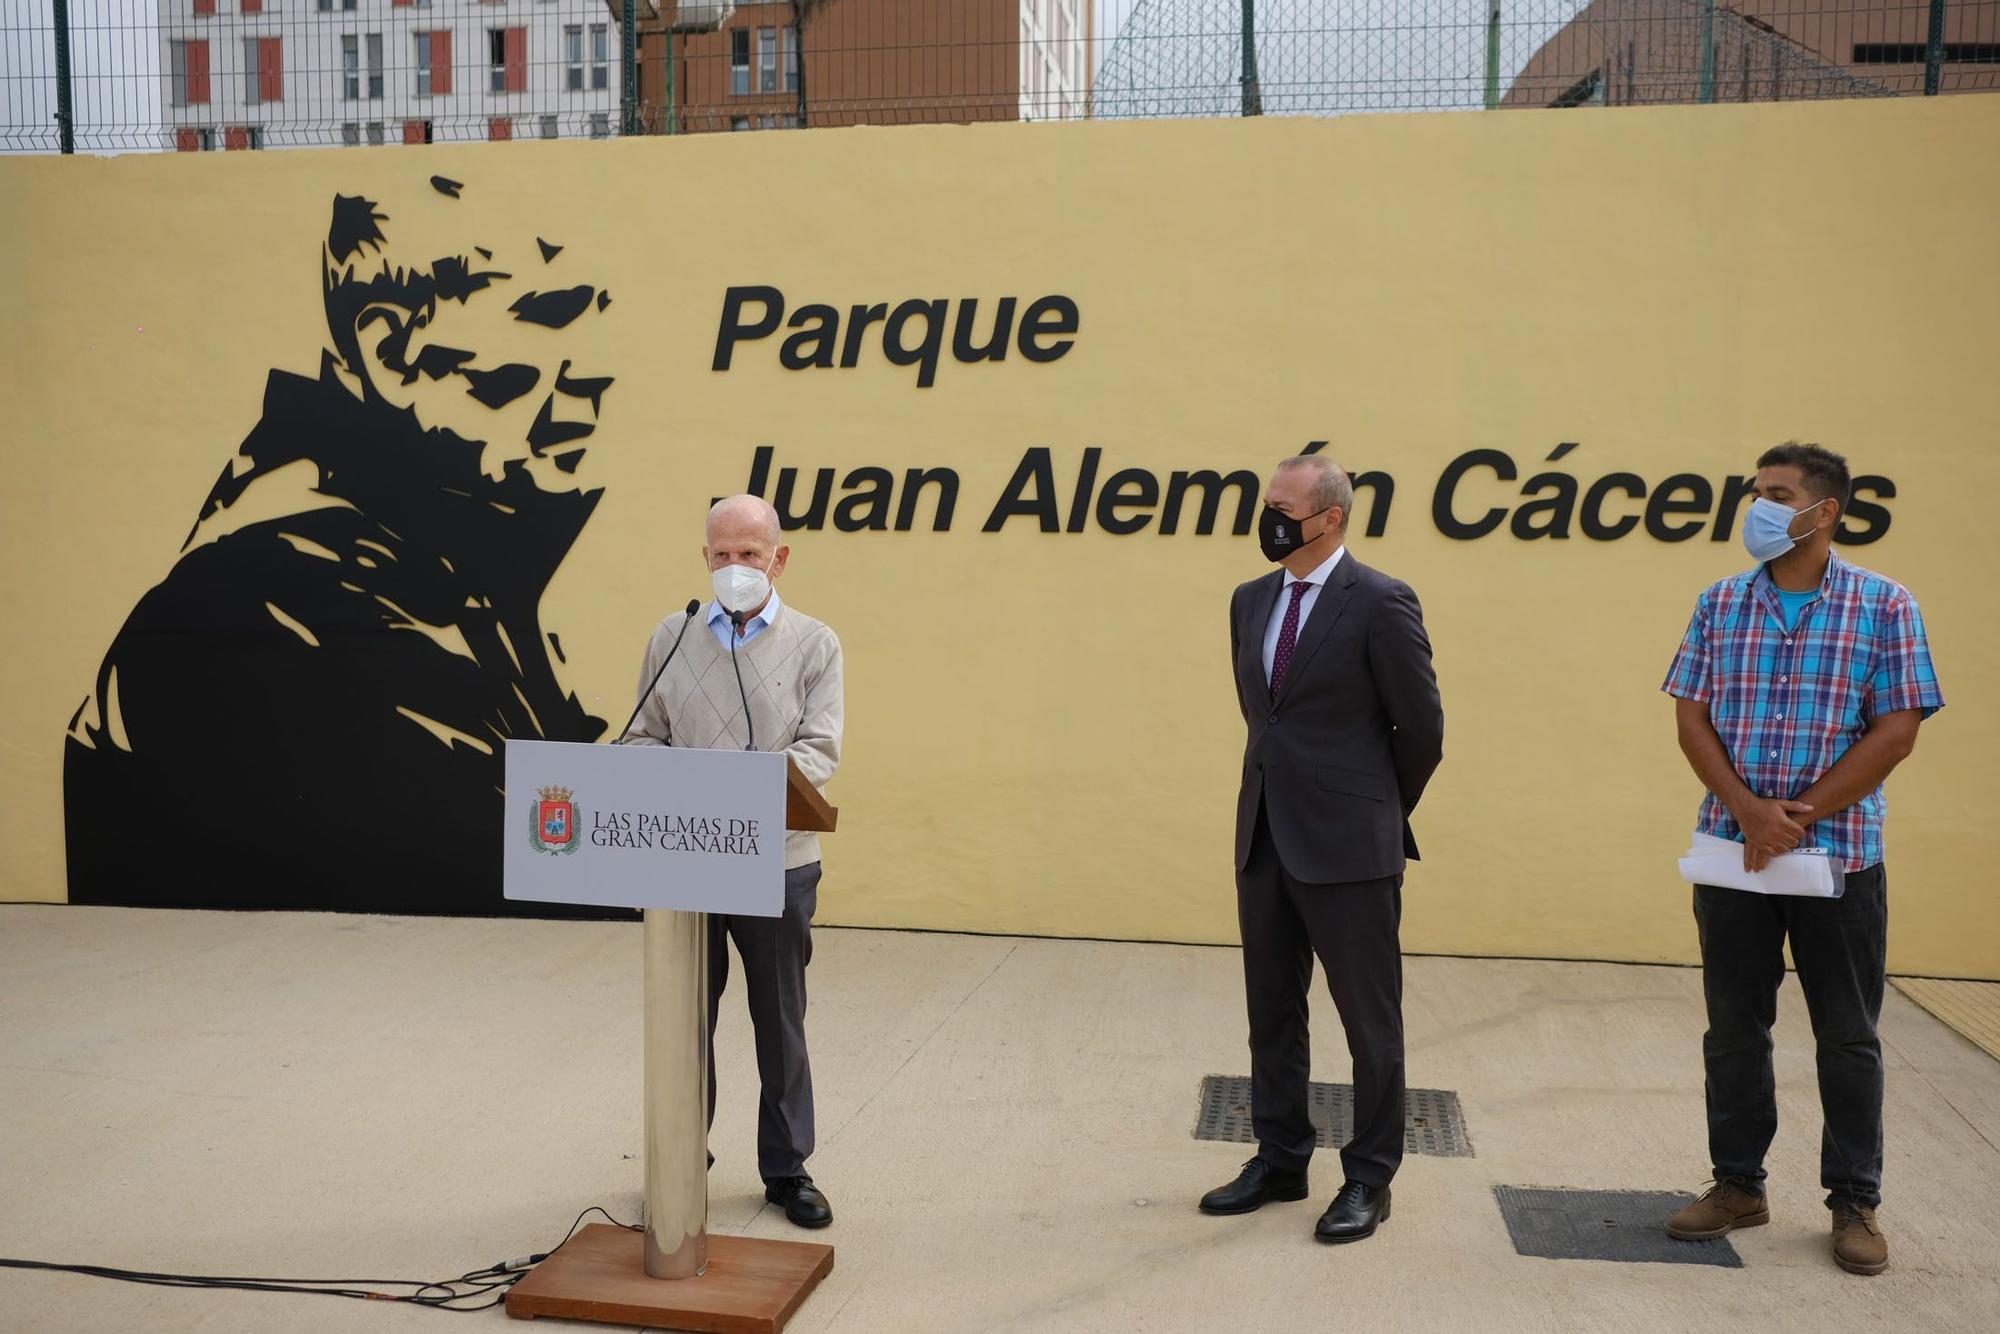 Homenaje a Juan Alemán Cáceres, histórico líder vecinal de La Paterna